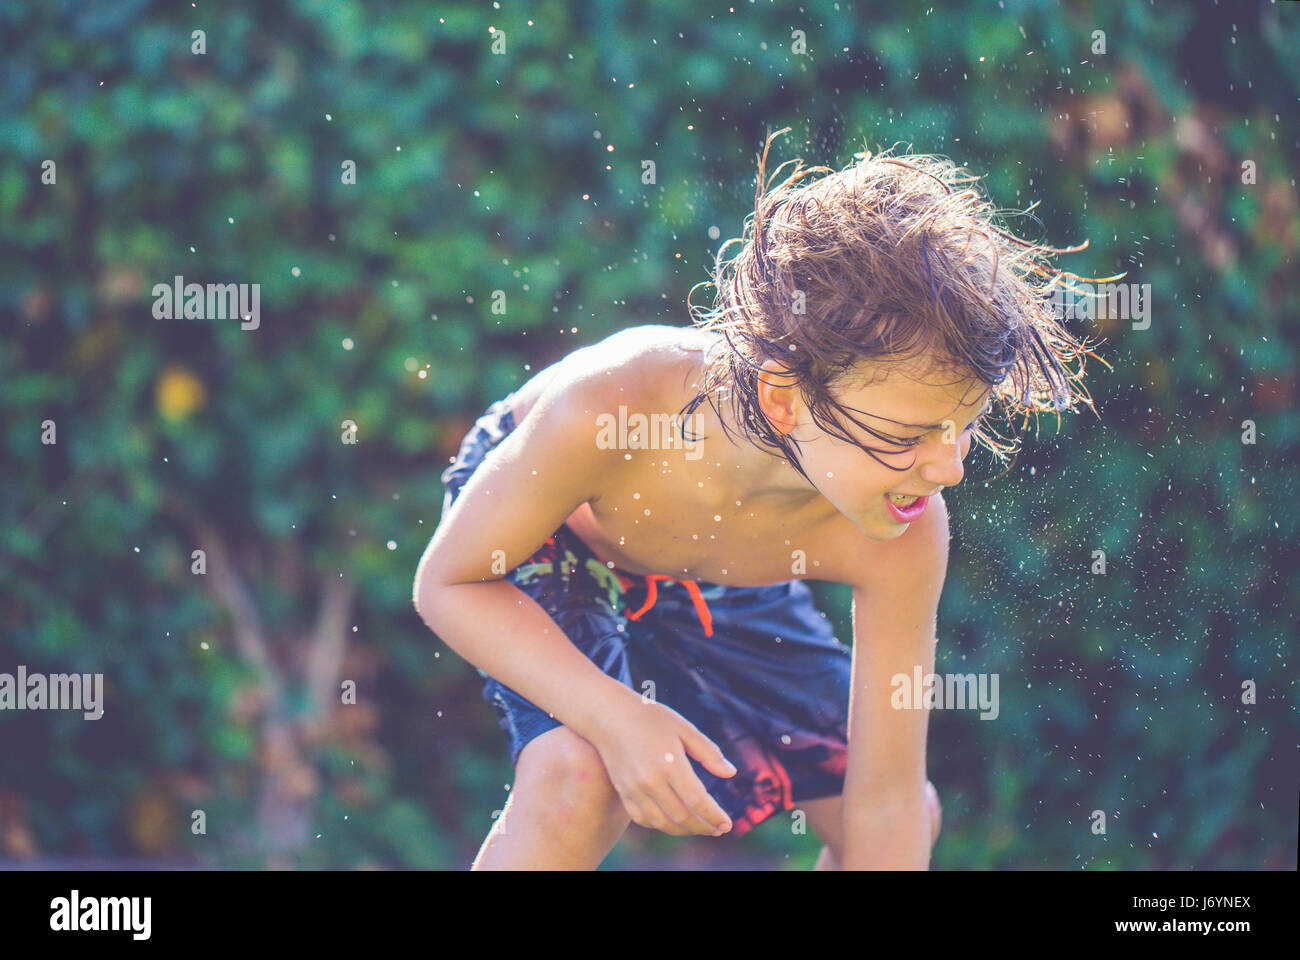 Boy with wet hair splashing in river Stock Photo